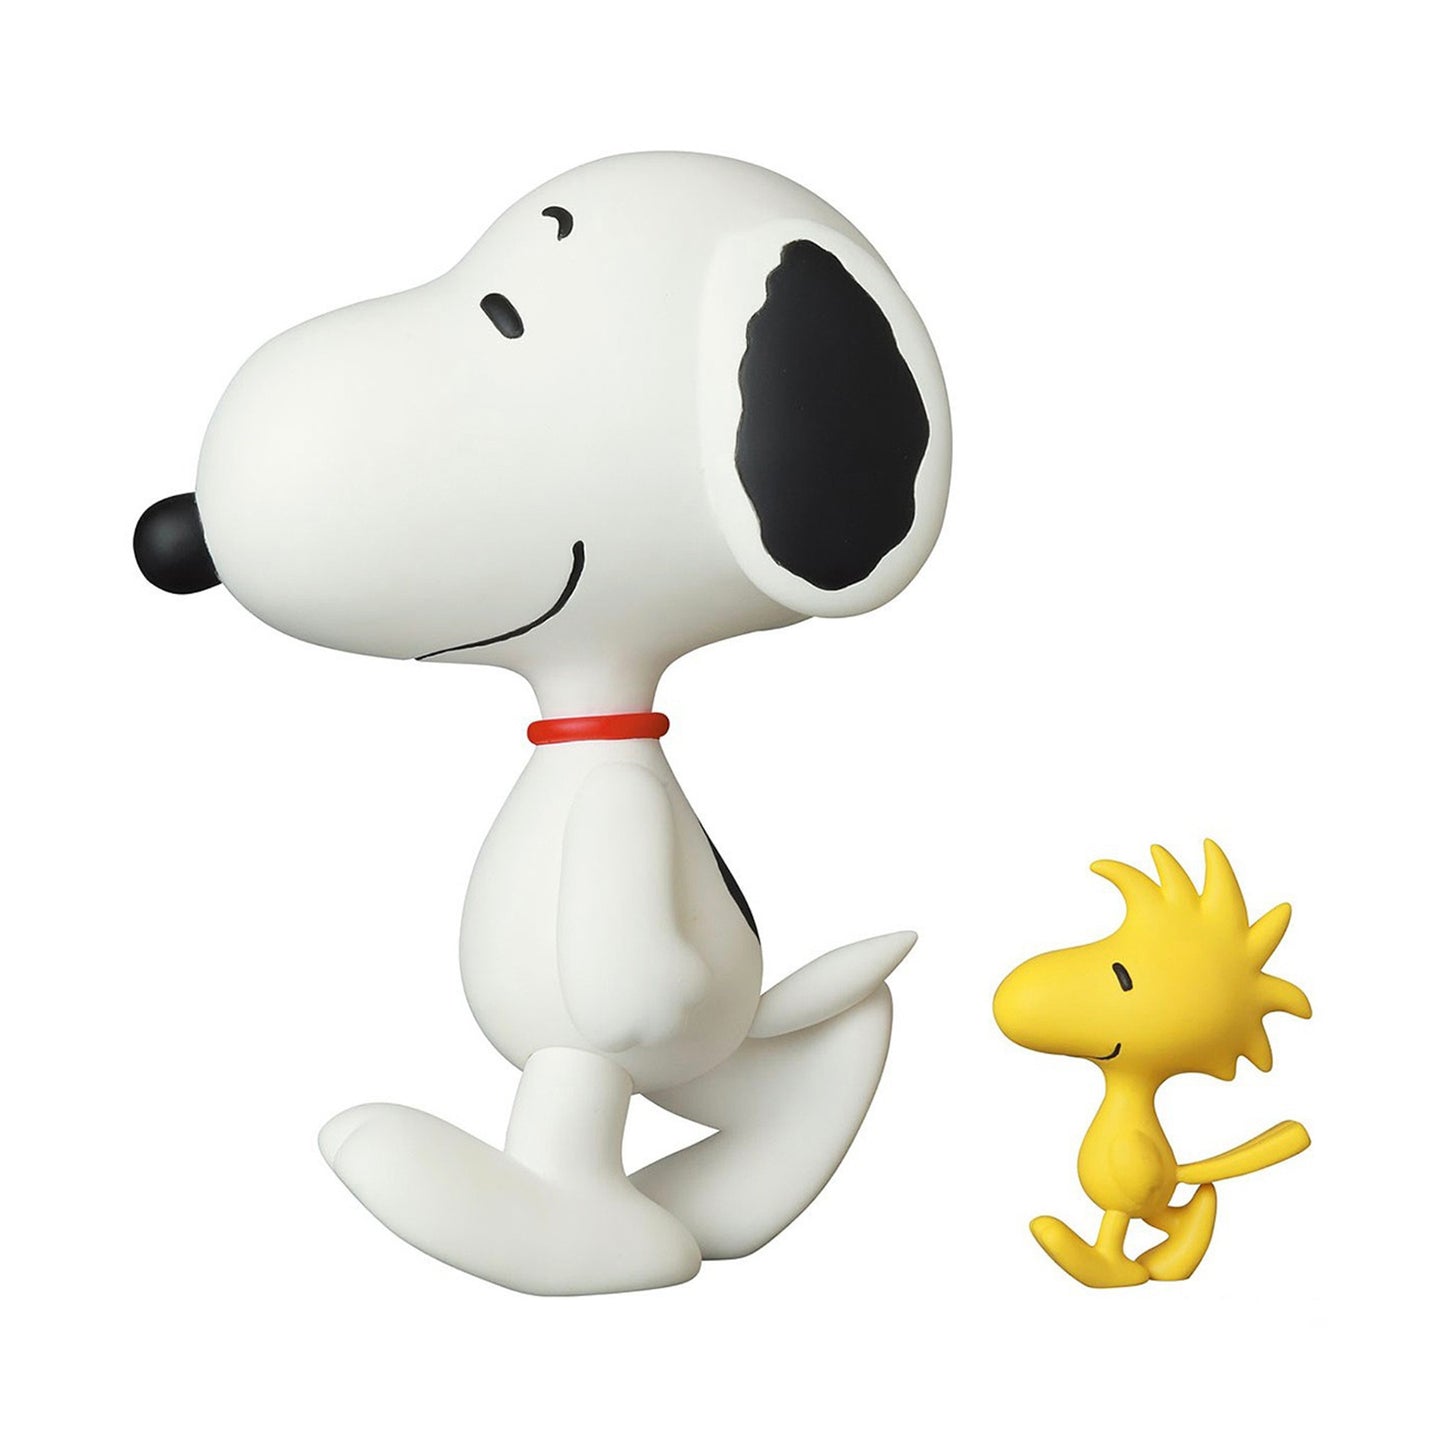 MEDICOM TOY: VCD - Peanuts Snoopy & Woodstock 1997 Ver. Figure